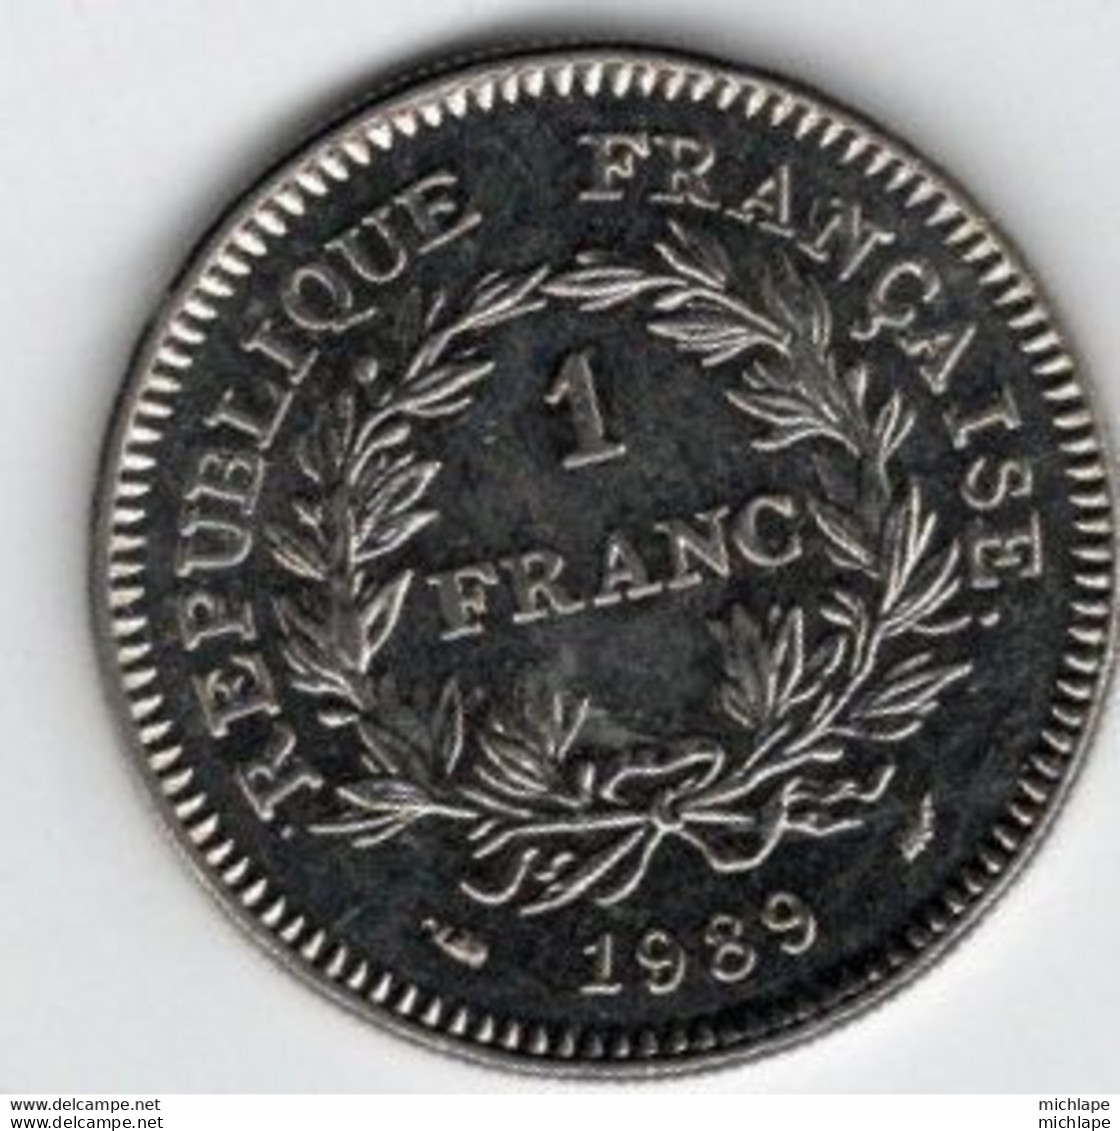 1 Franc Etats Generaux 1989 ( Comme Neuve ) - 1 Franc